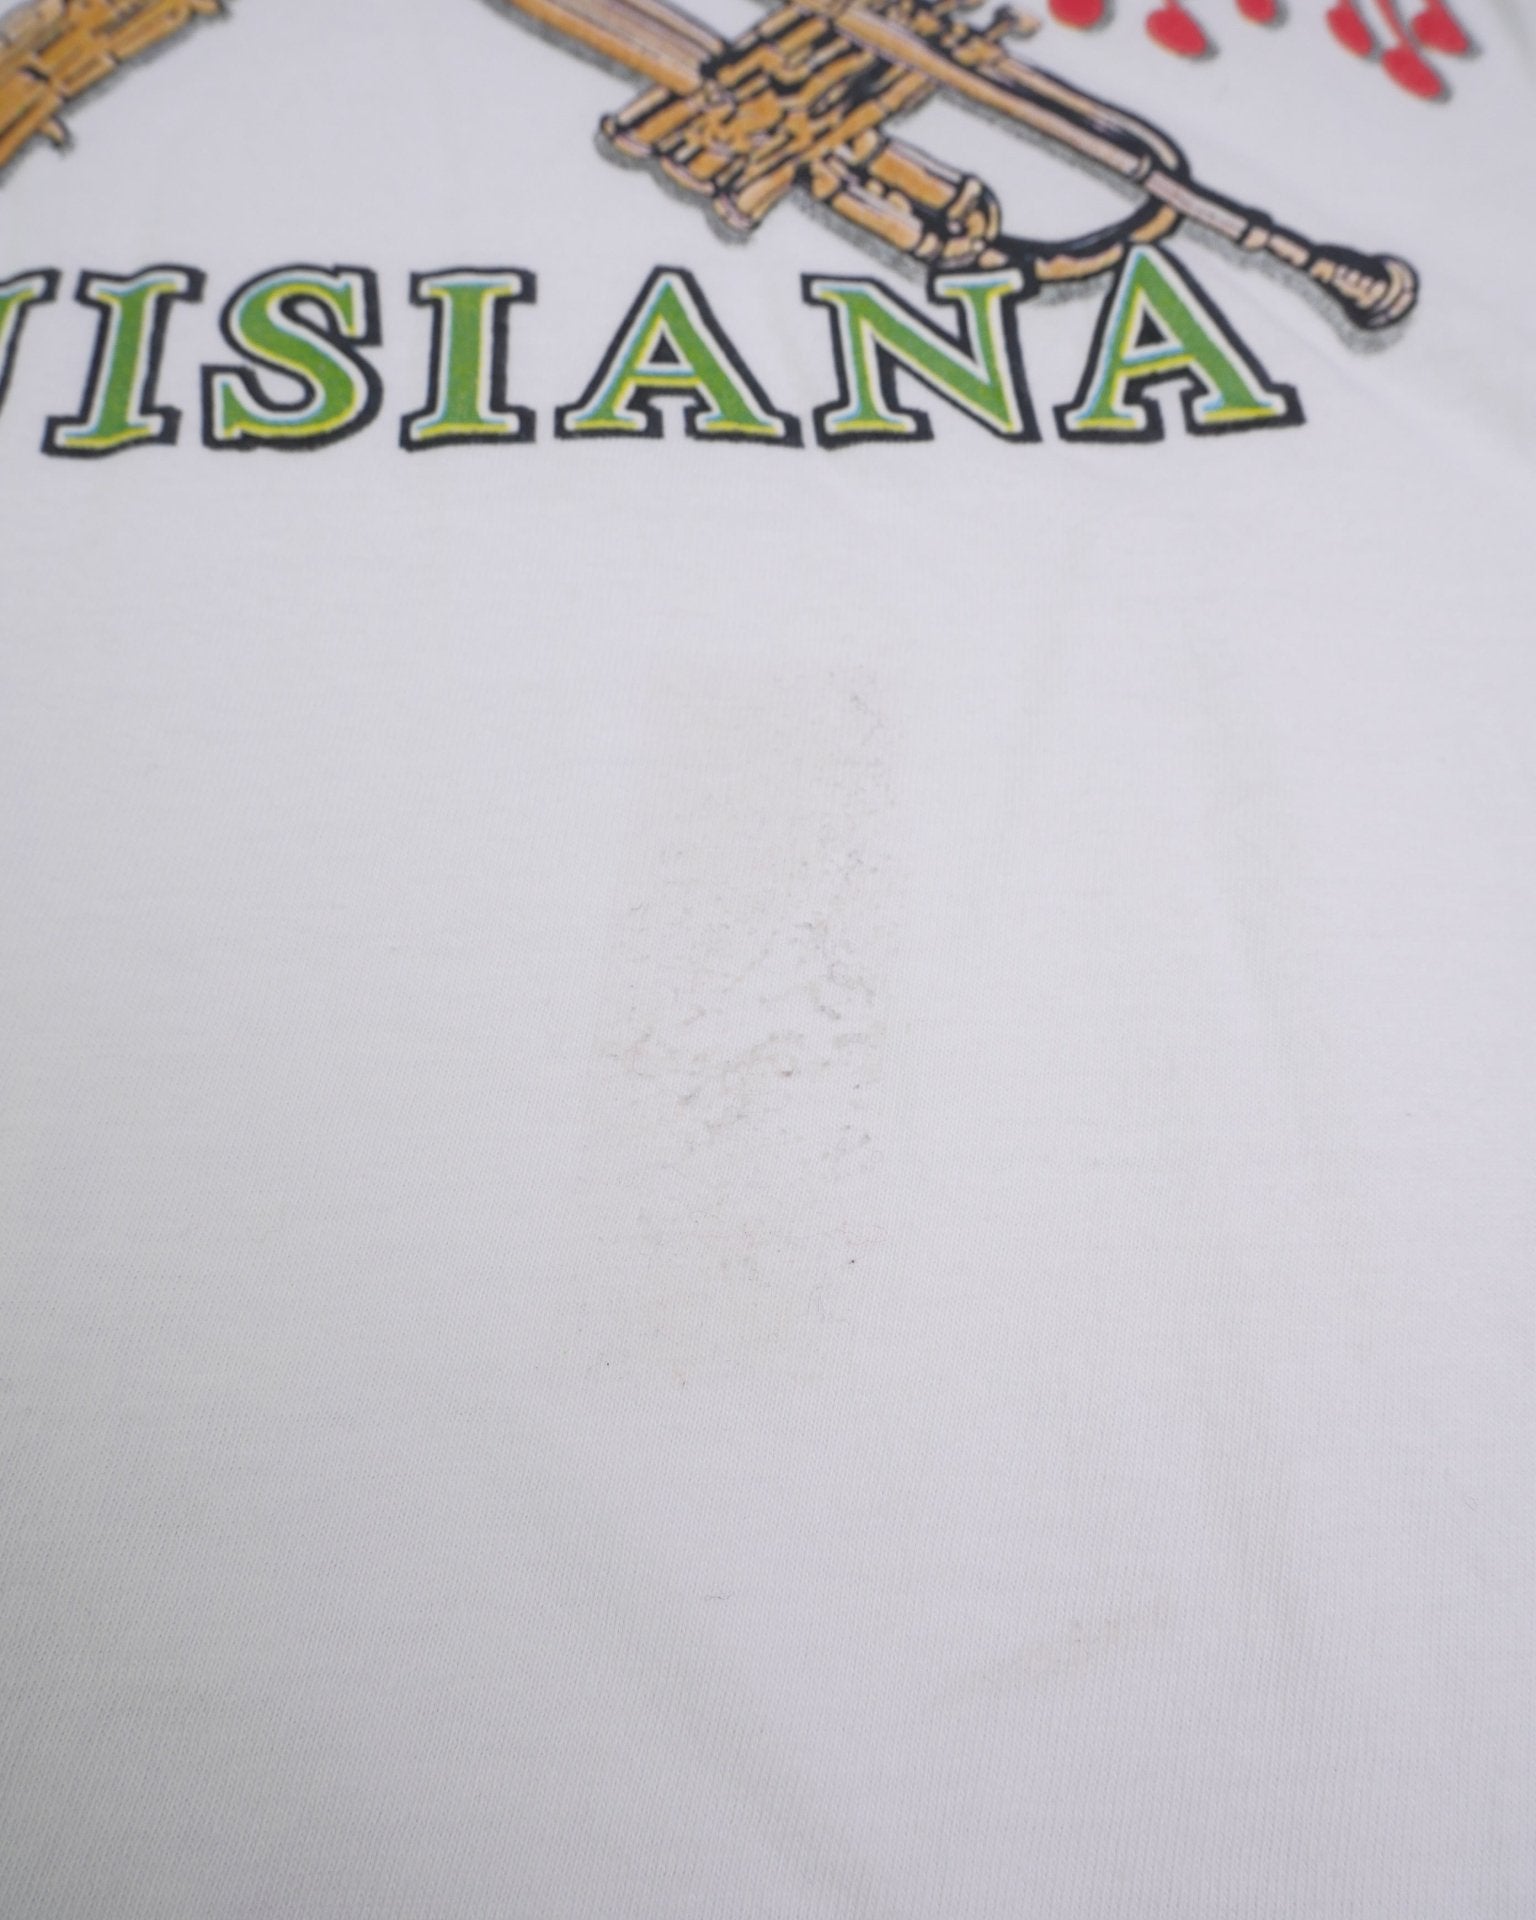 New Orleans printed Logo Shirt - Peeces